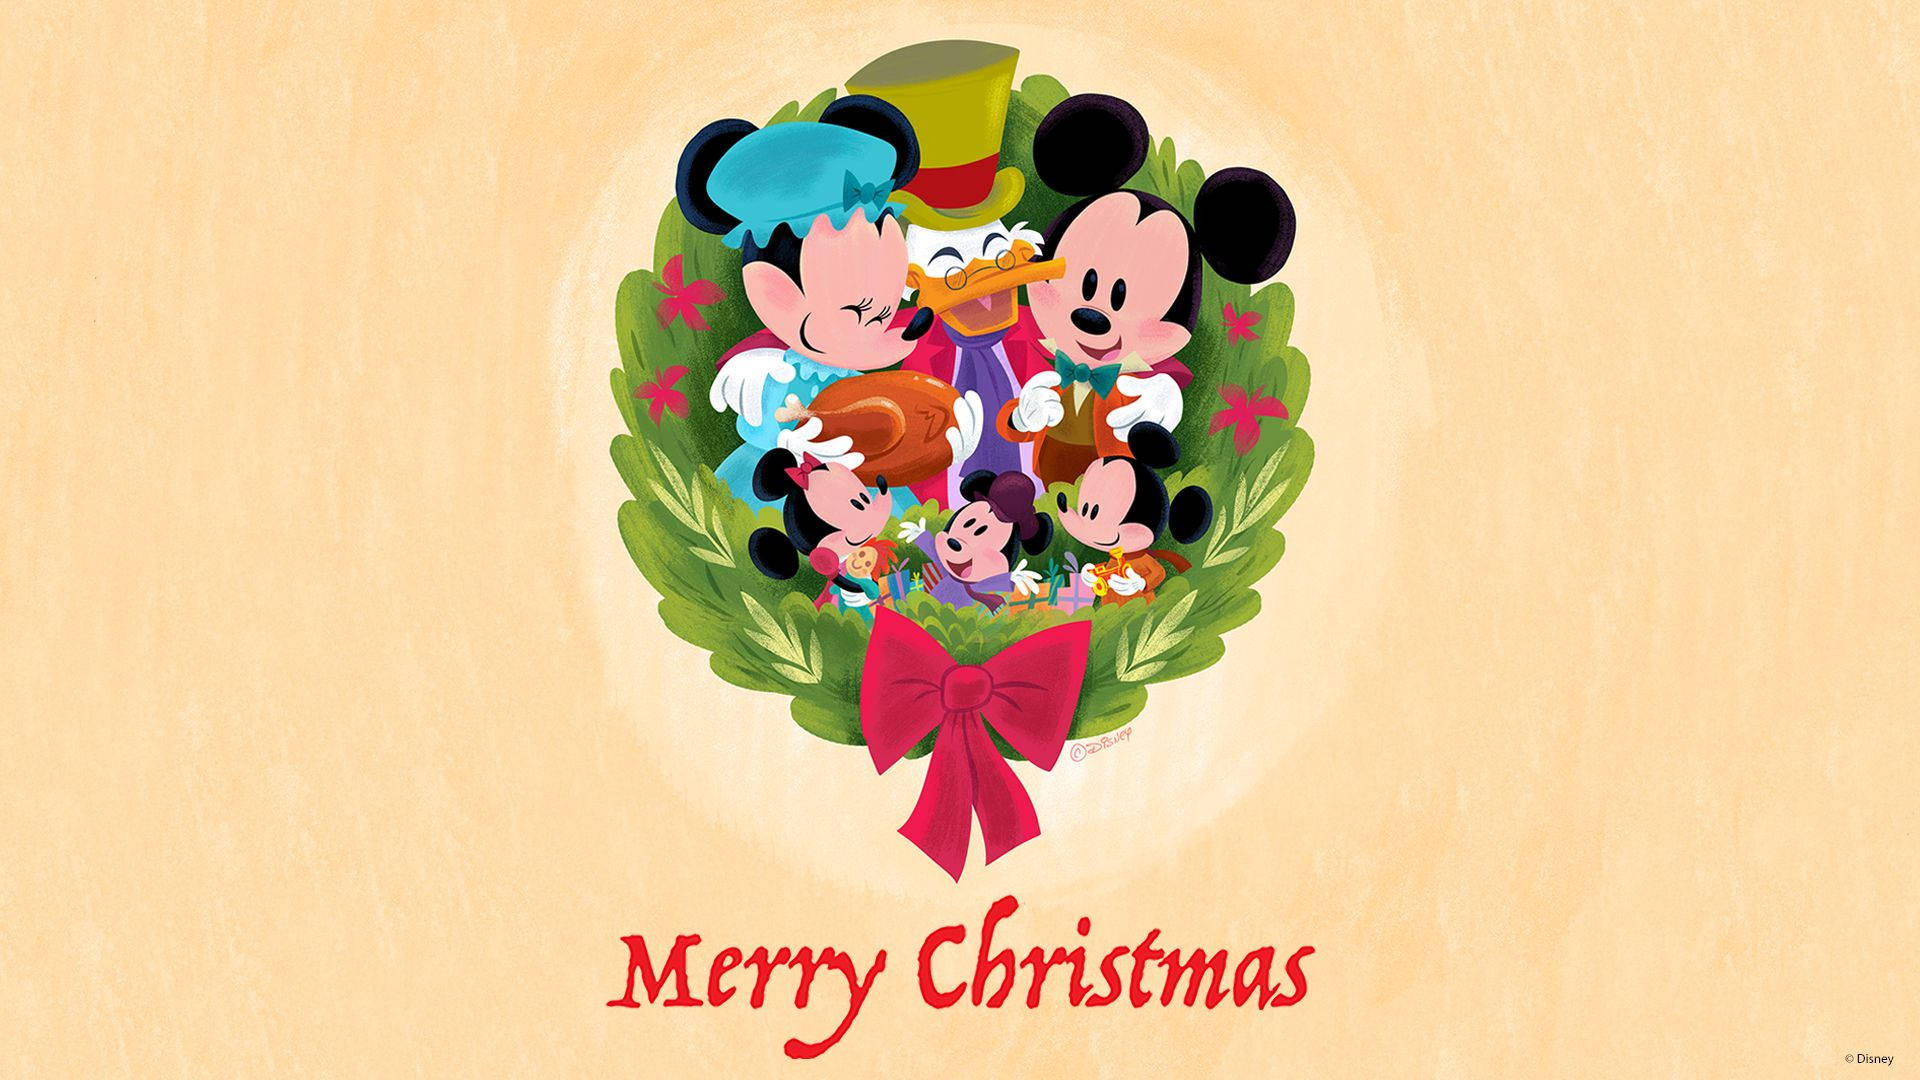 Disney 1920x1080 Hd Mickey Mouse Merry Christmas Wreath